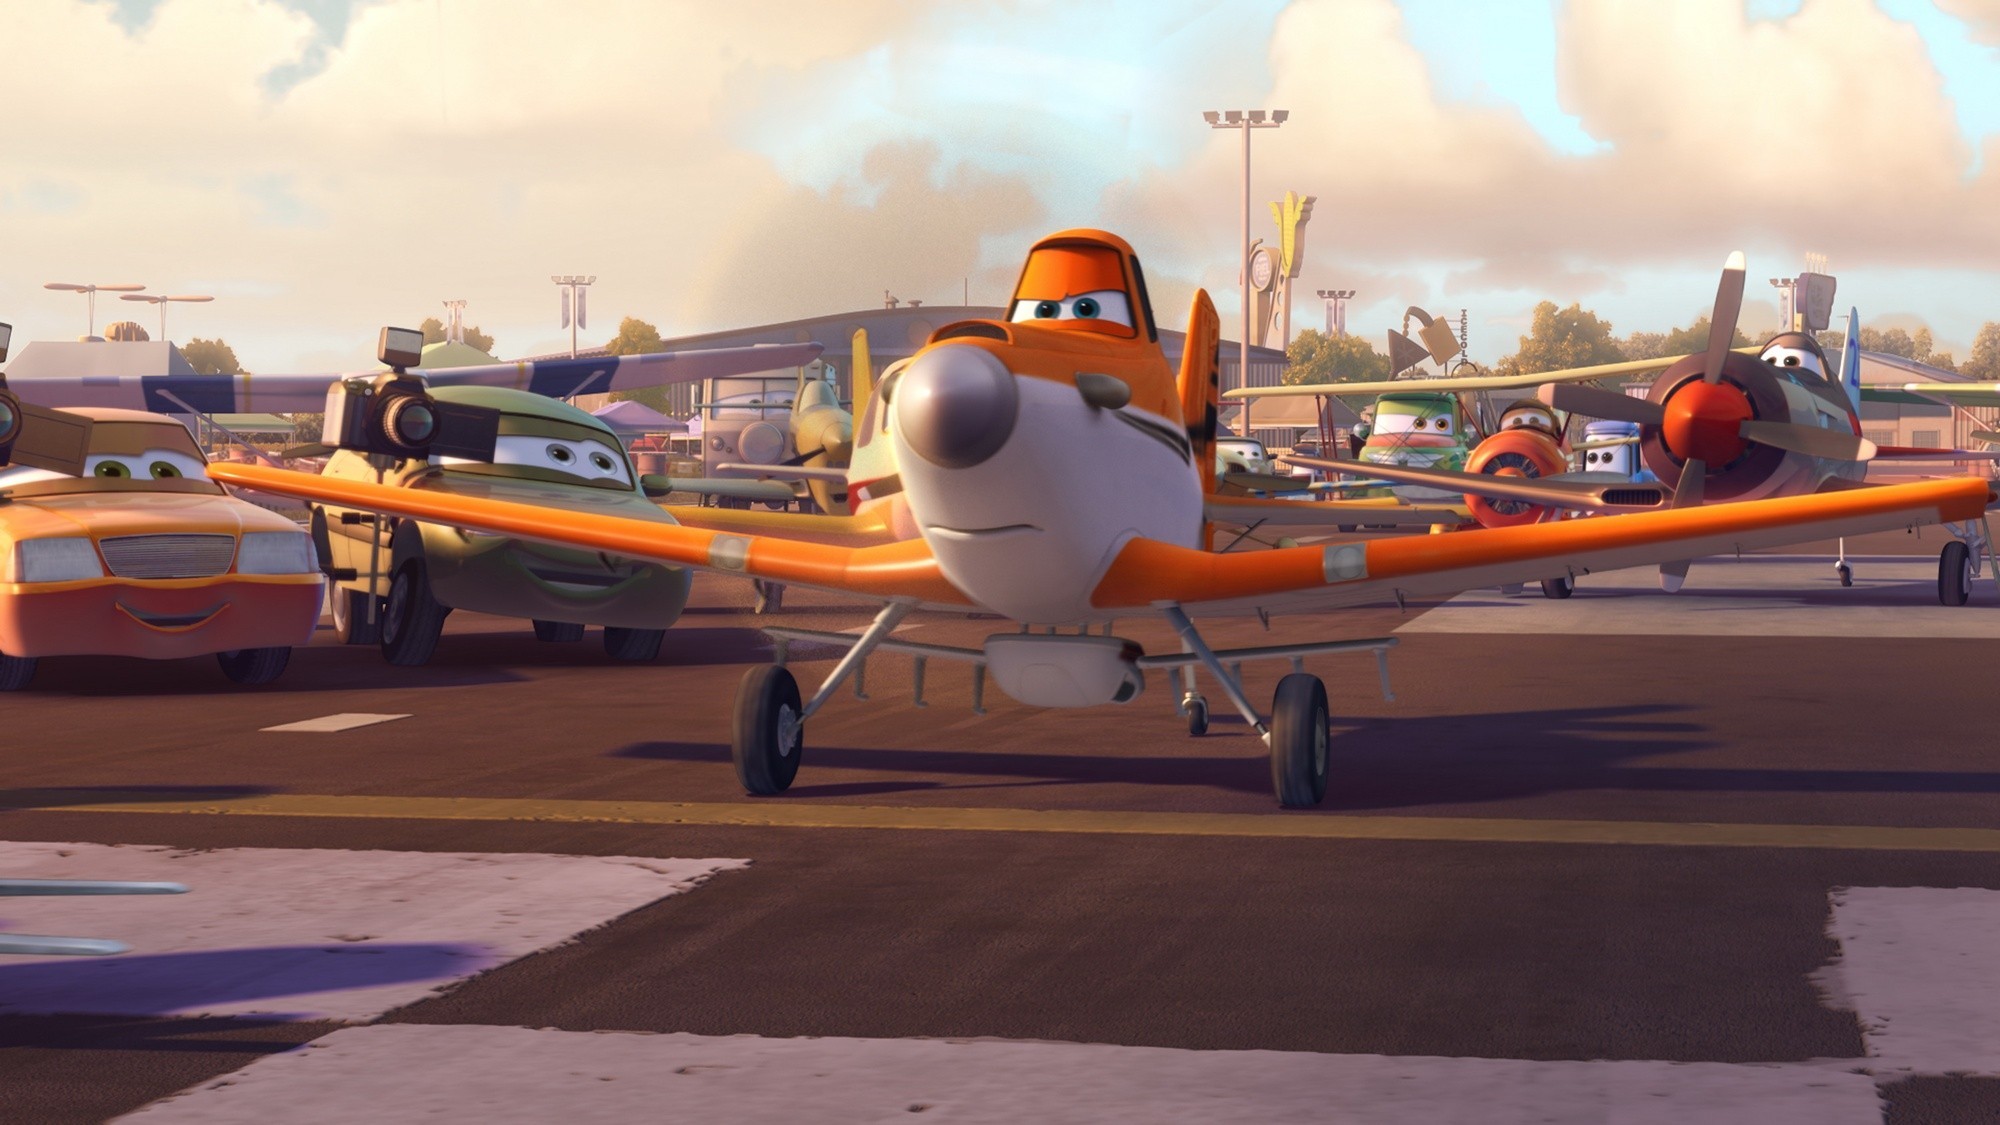 Dusty Crophopper from Walt Disney Pictures' Planes (2013)